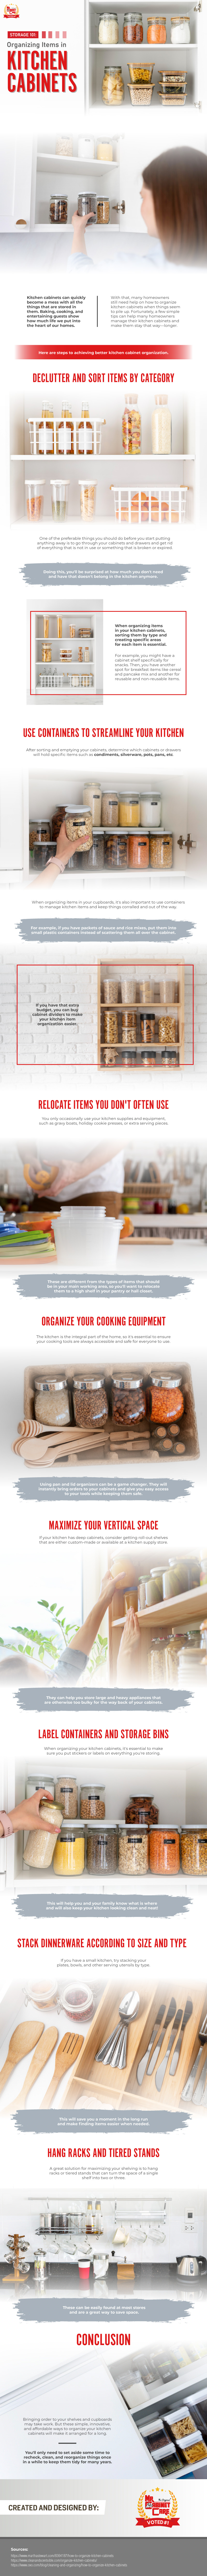 Storage 101: Organizing Items in Kitchen Cabinets